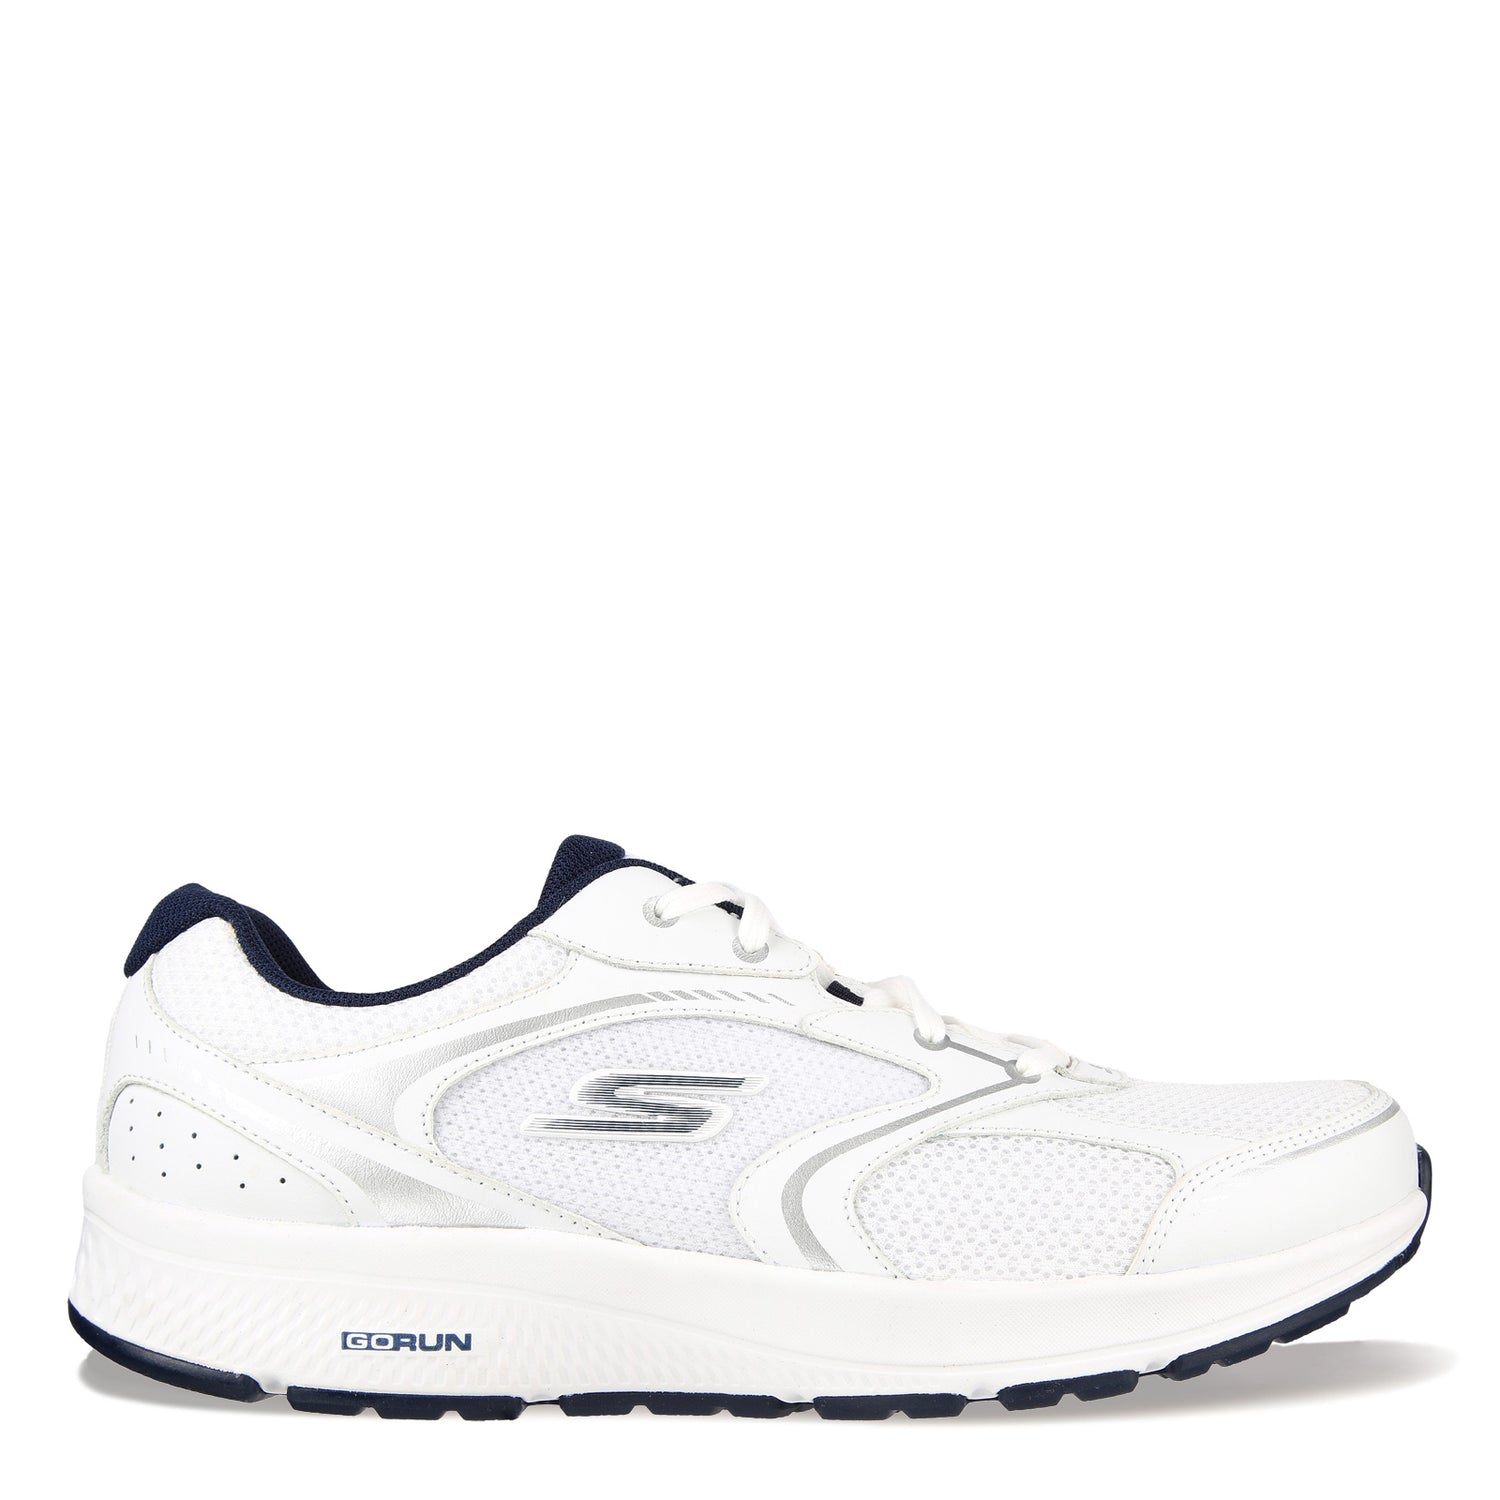 Peltz Shoes  Men's Skechers GO RUN Consistent – Specie Running Shoe - Wide Width White Navy 220371WW-WNV